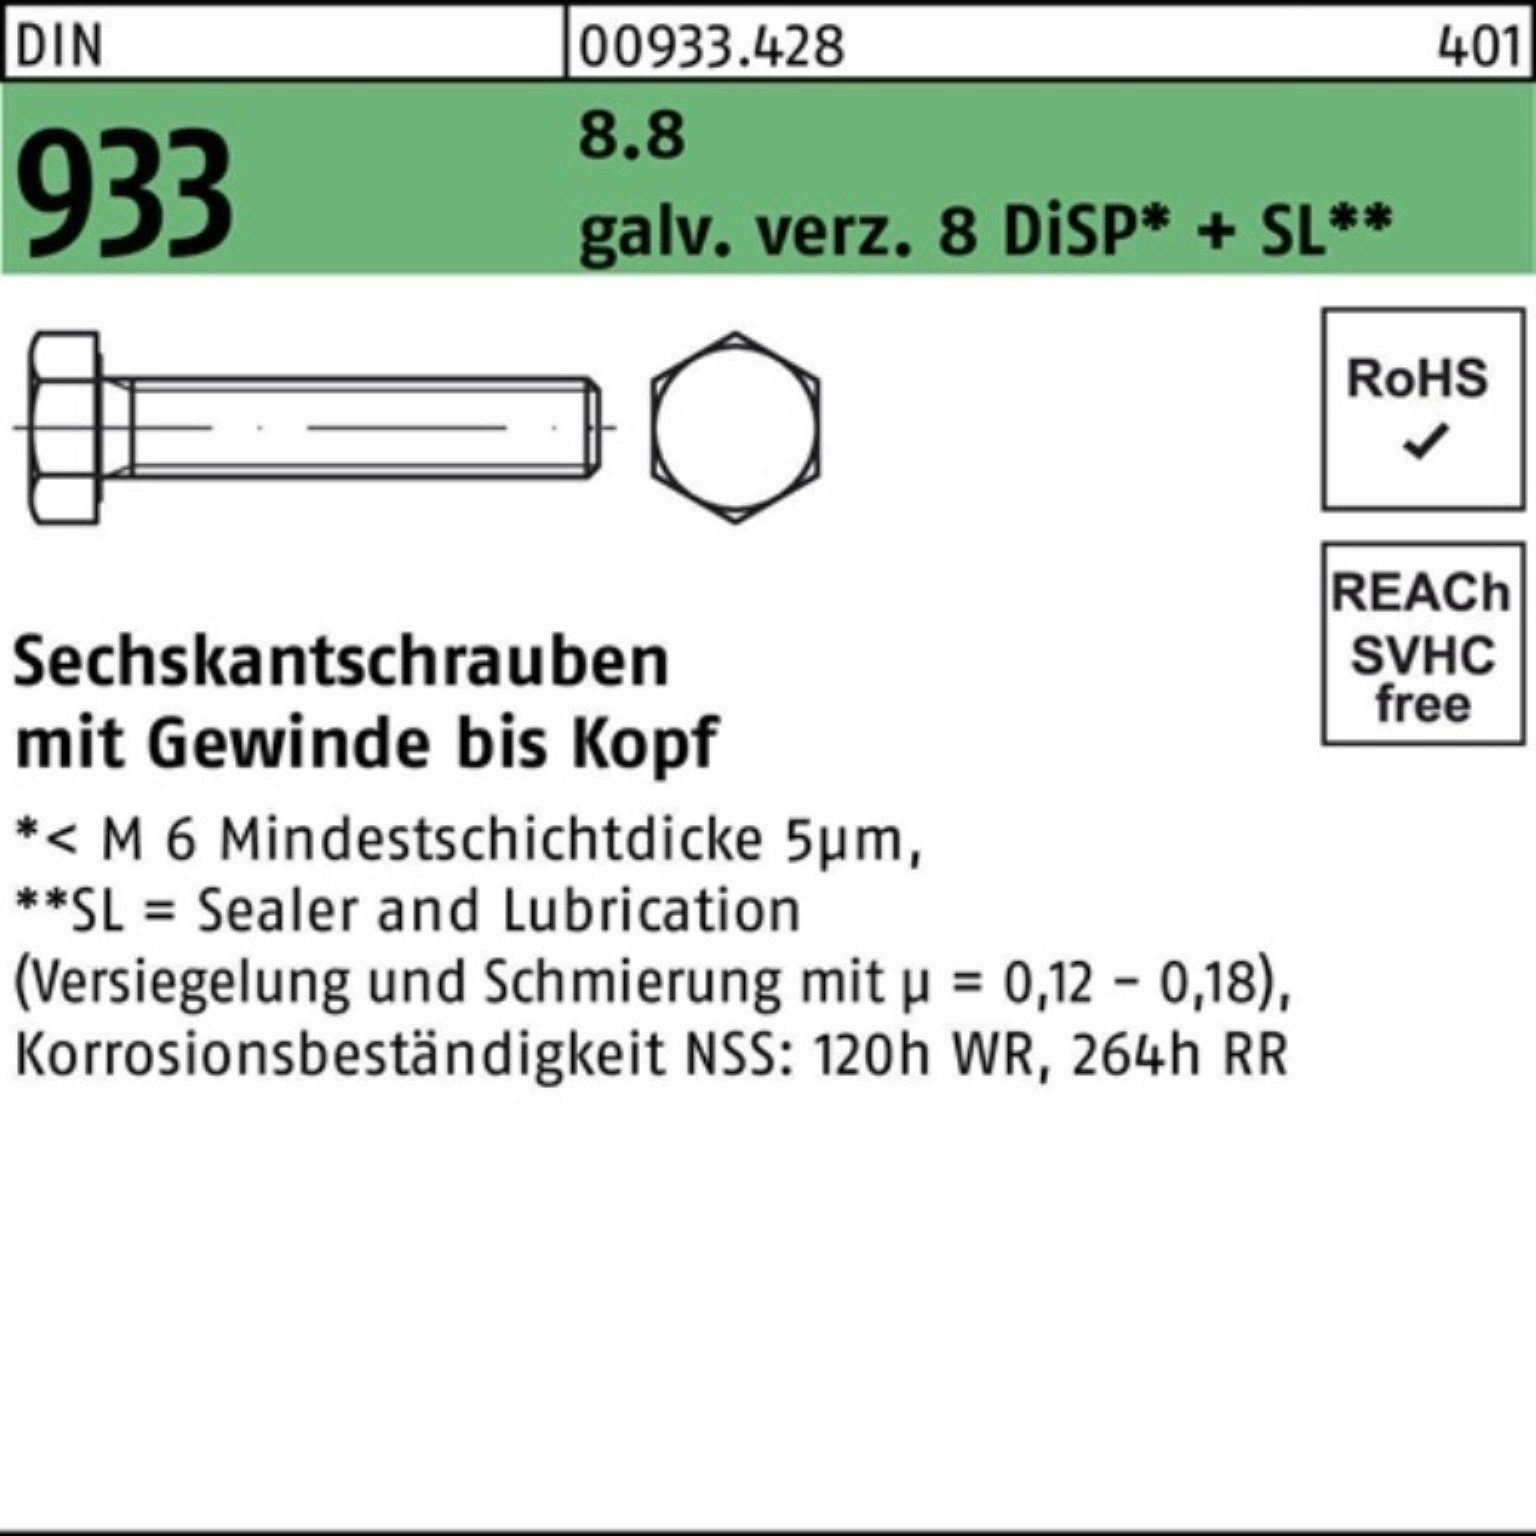 DIN Sechskantschraube gal 933 Reyher Pack DiSP + VG 8.8 S 8 Sechskantschraube M16x 120 Zn 100er